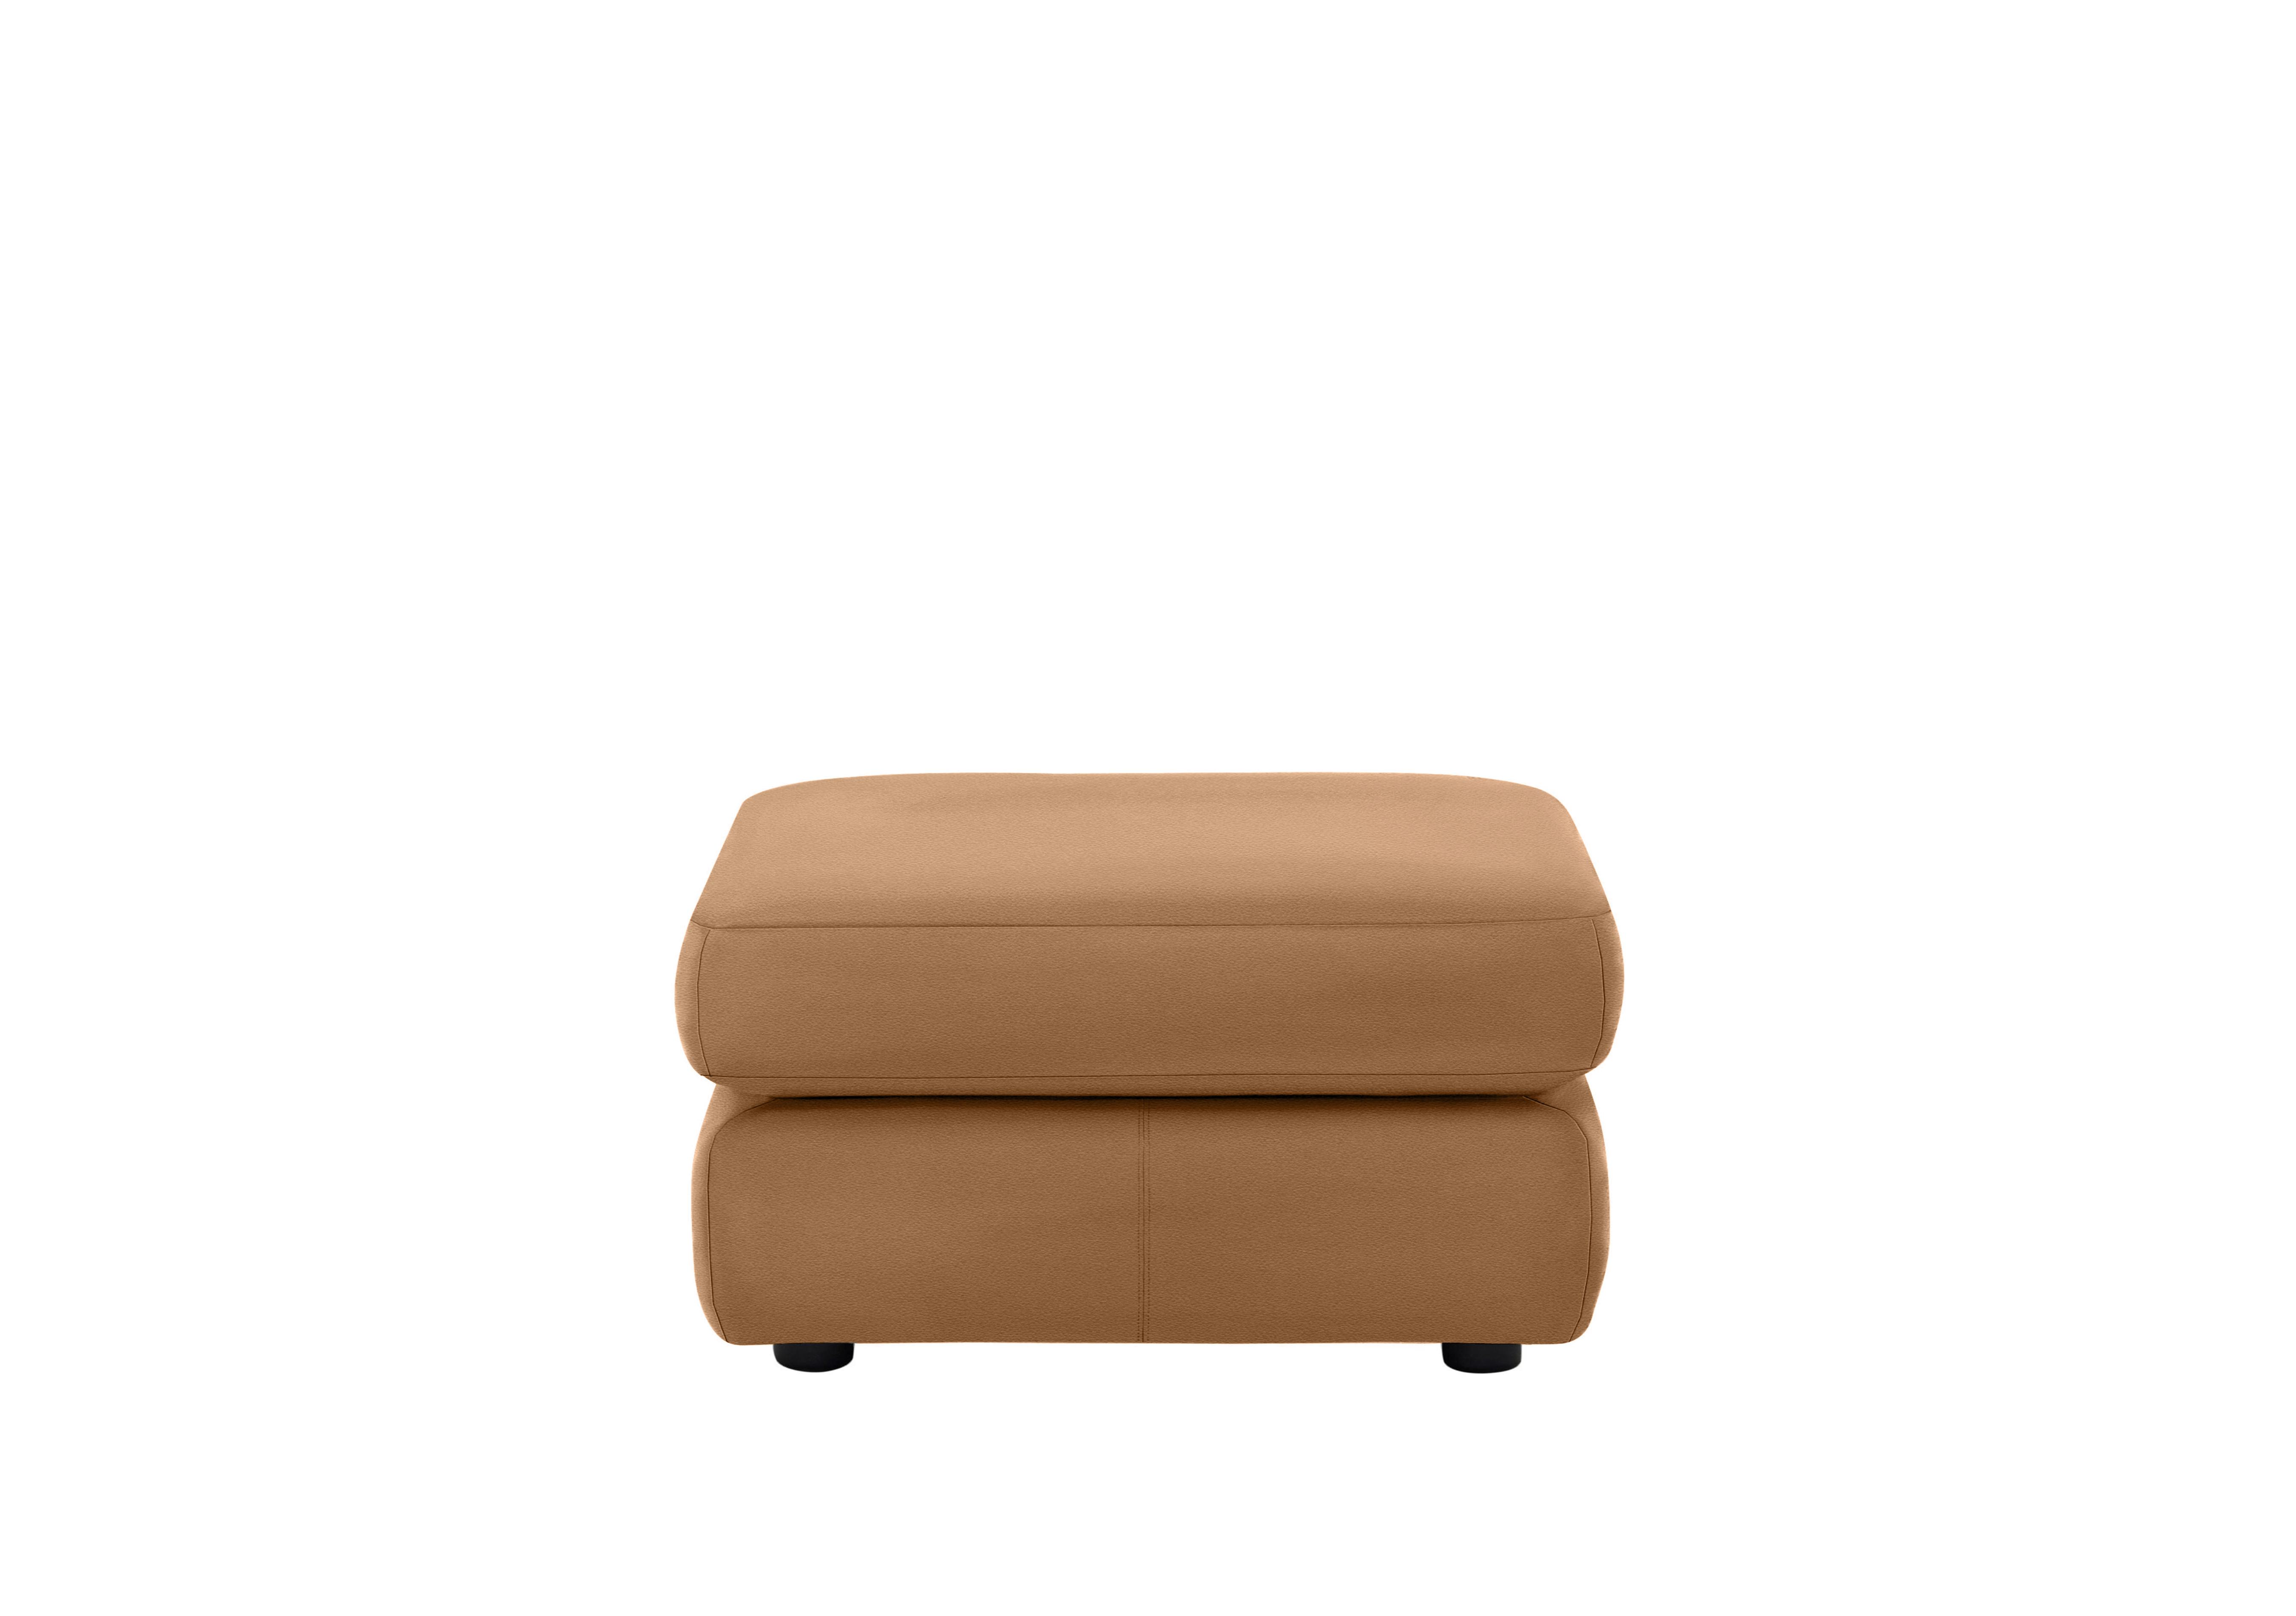 Avon Leather Storage Footstool in L847 Cambridge Tan on Furniture Village